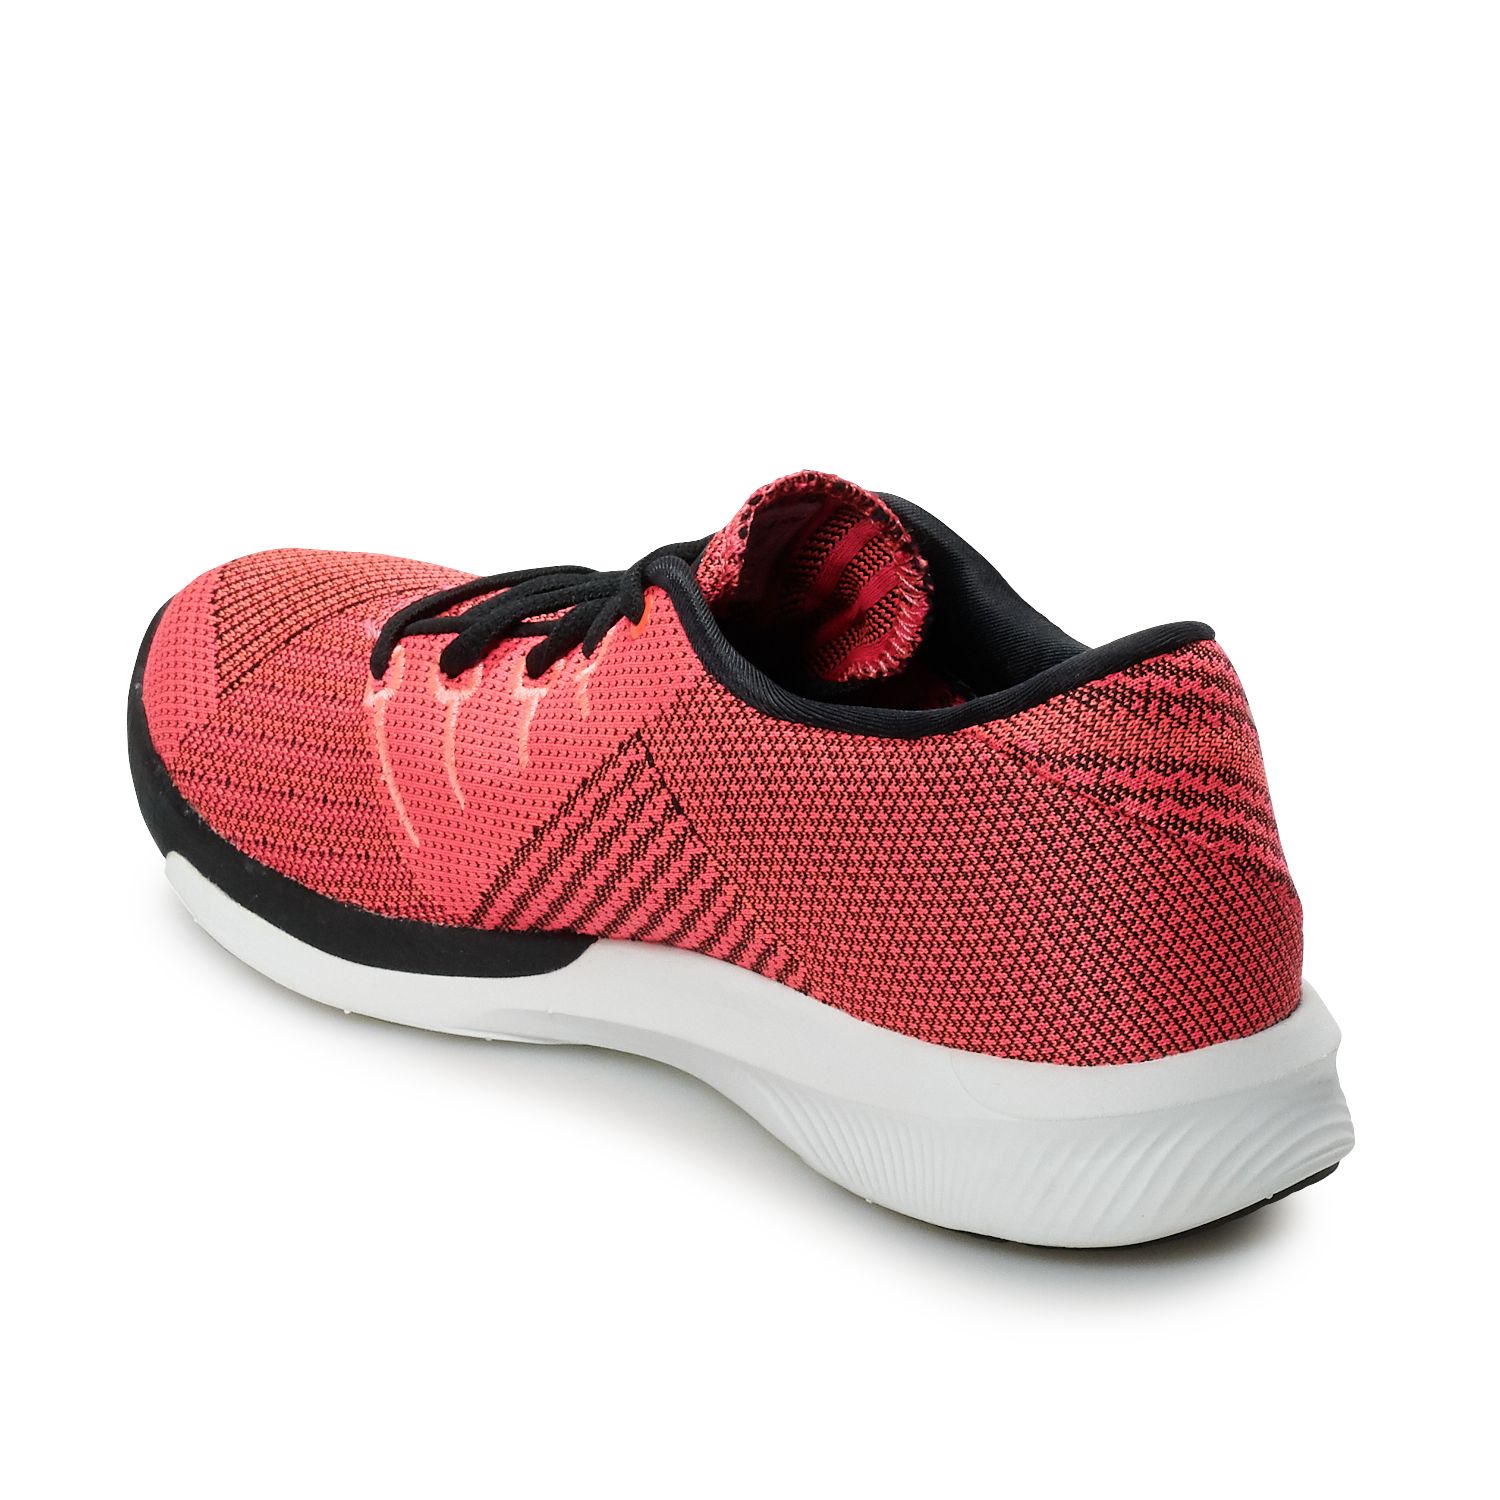 asics fuzex knit women's running shoes